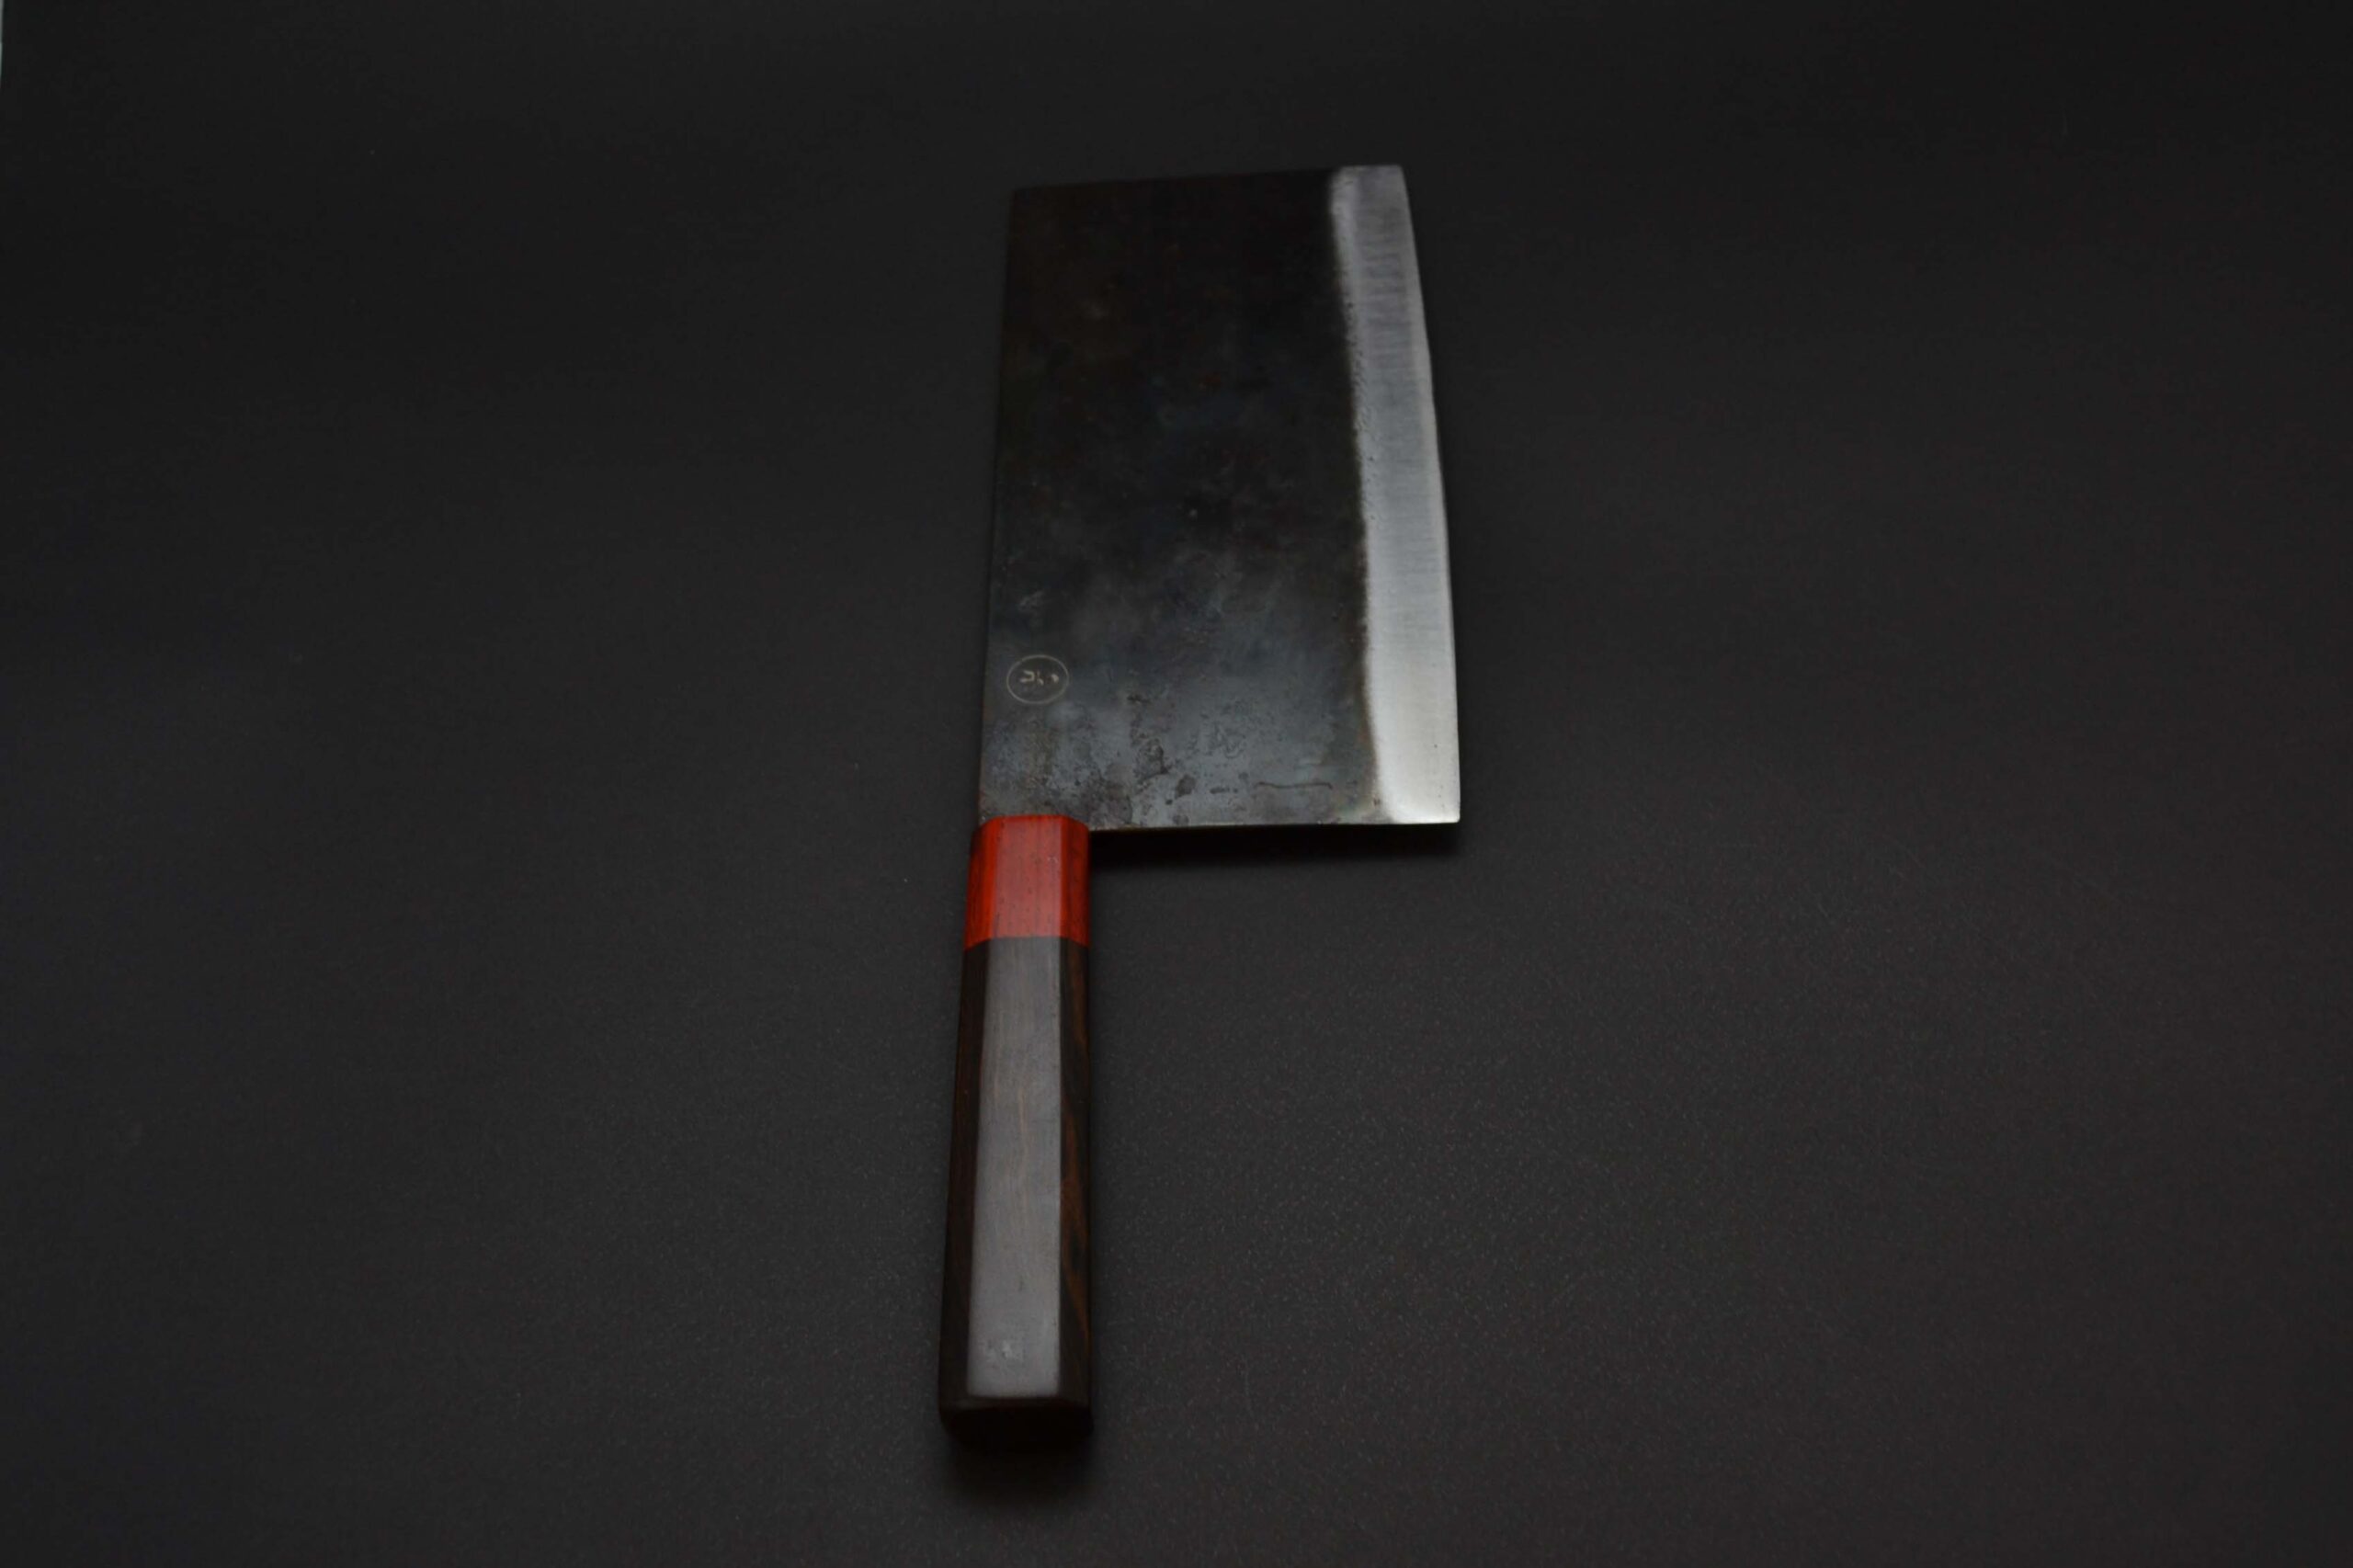 DAO VUA V3 52100 Chinese Cleaver 200mm – Tokushu Knife